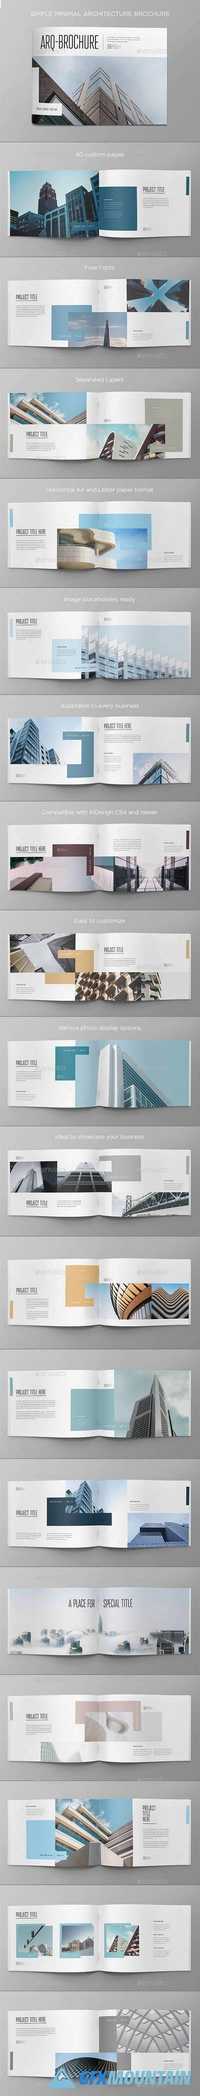 Simple Minimal Architecture Brochure 20454300